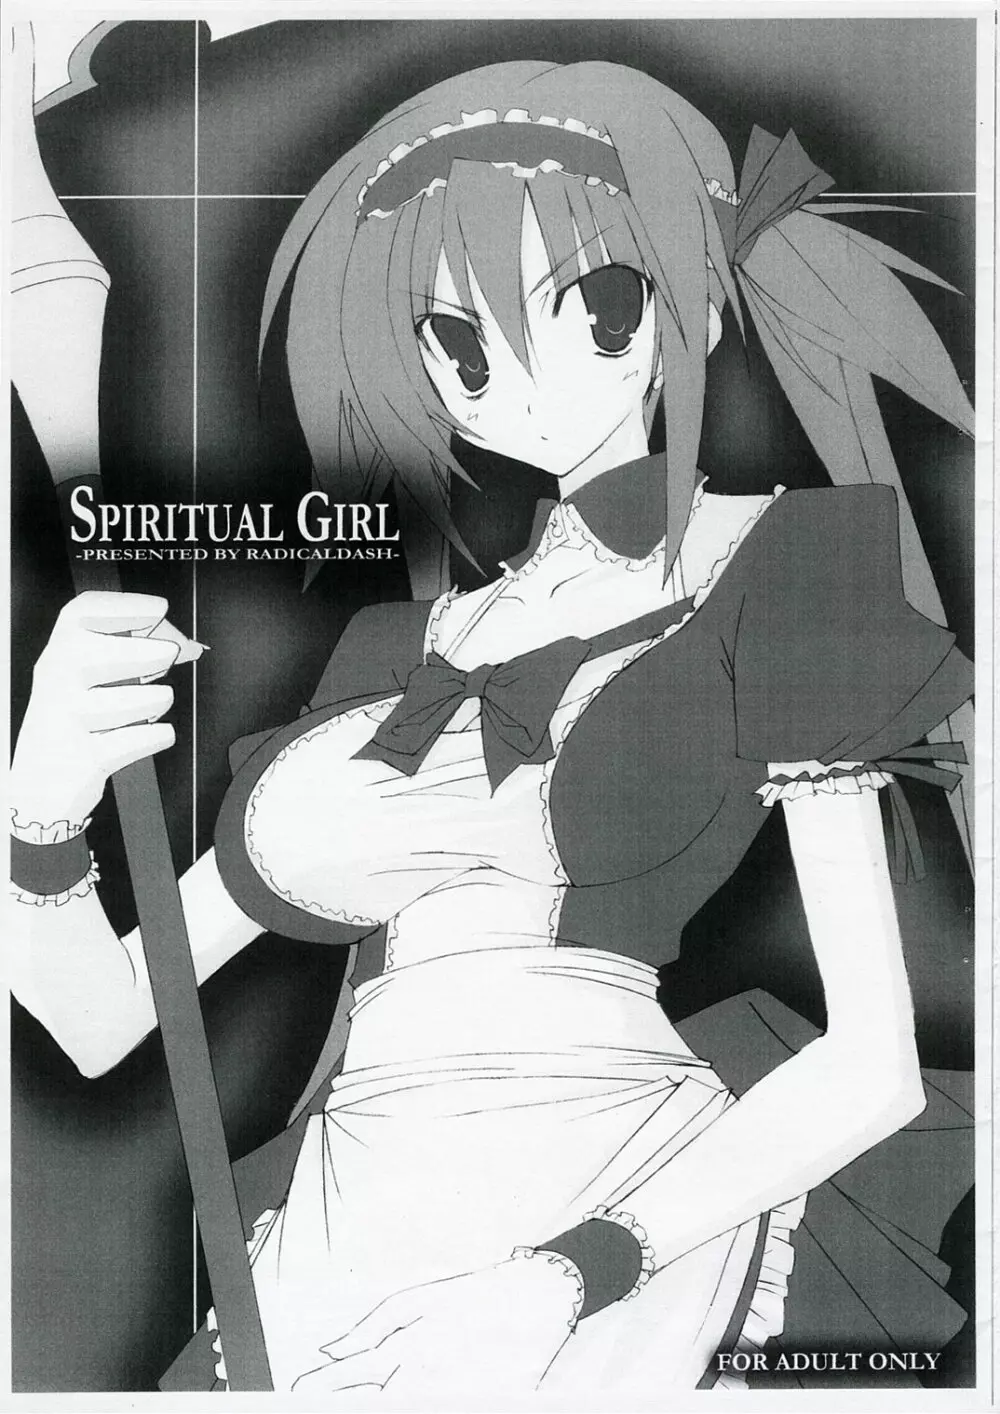 SPIRITUAL GIRL